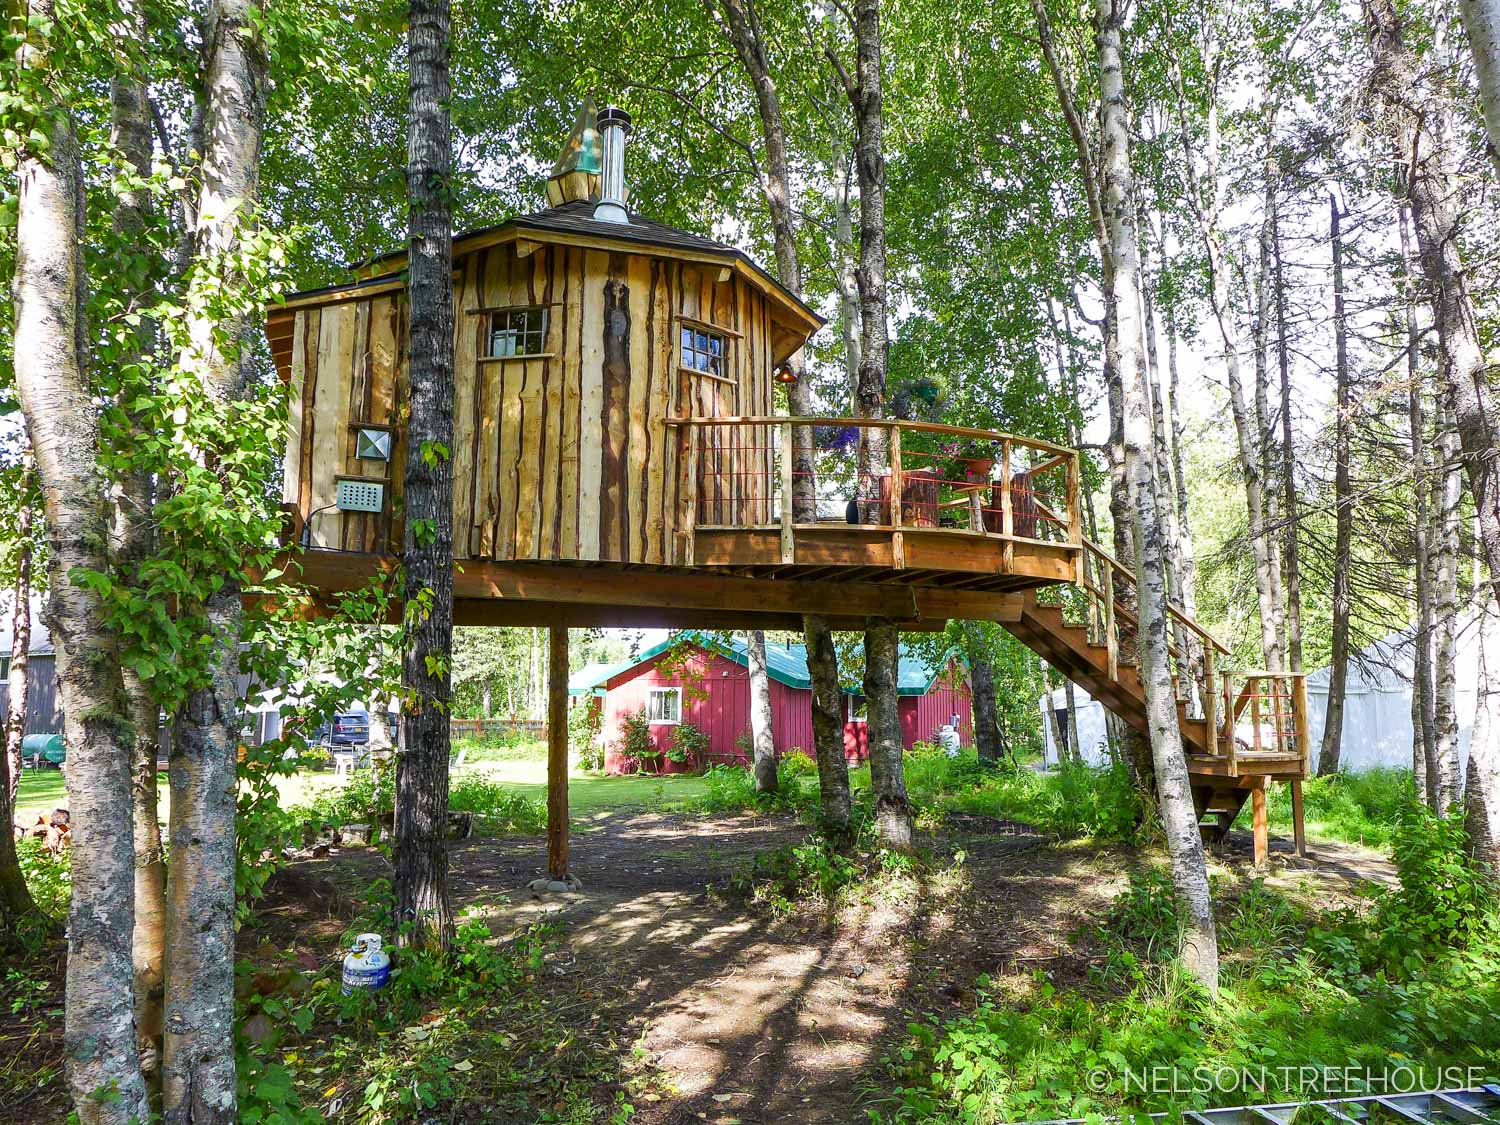  Alaskan Sauna Hut integration with forest - Nelson Treehouse 